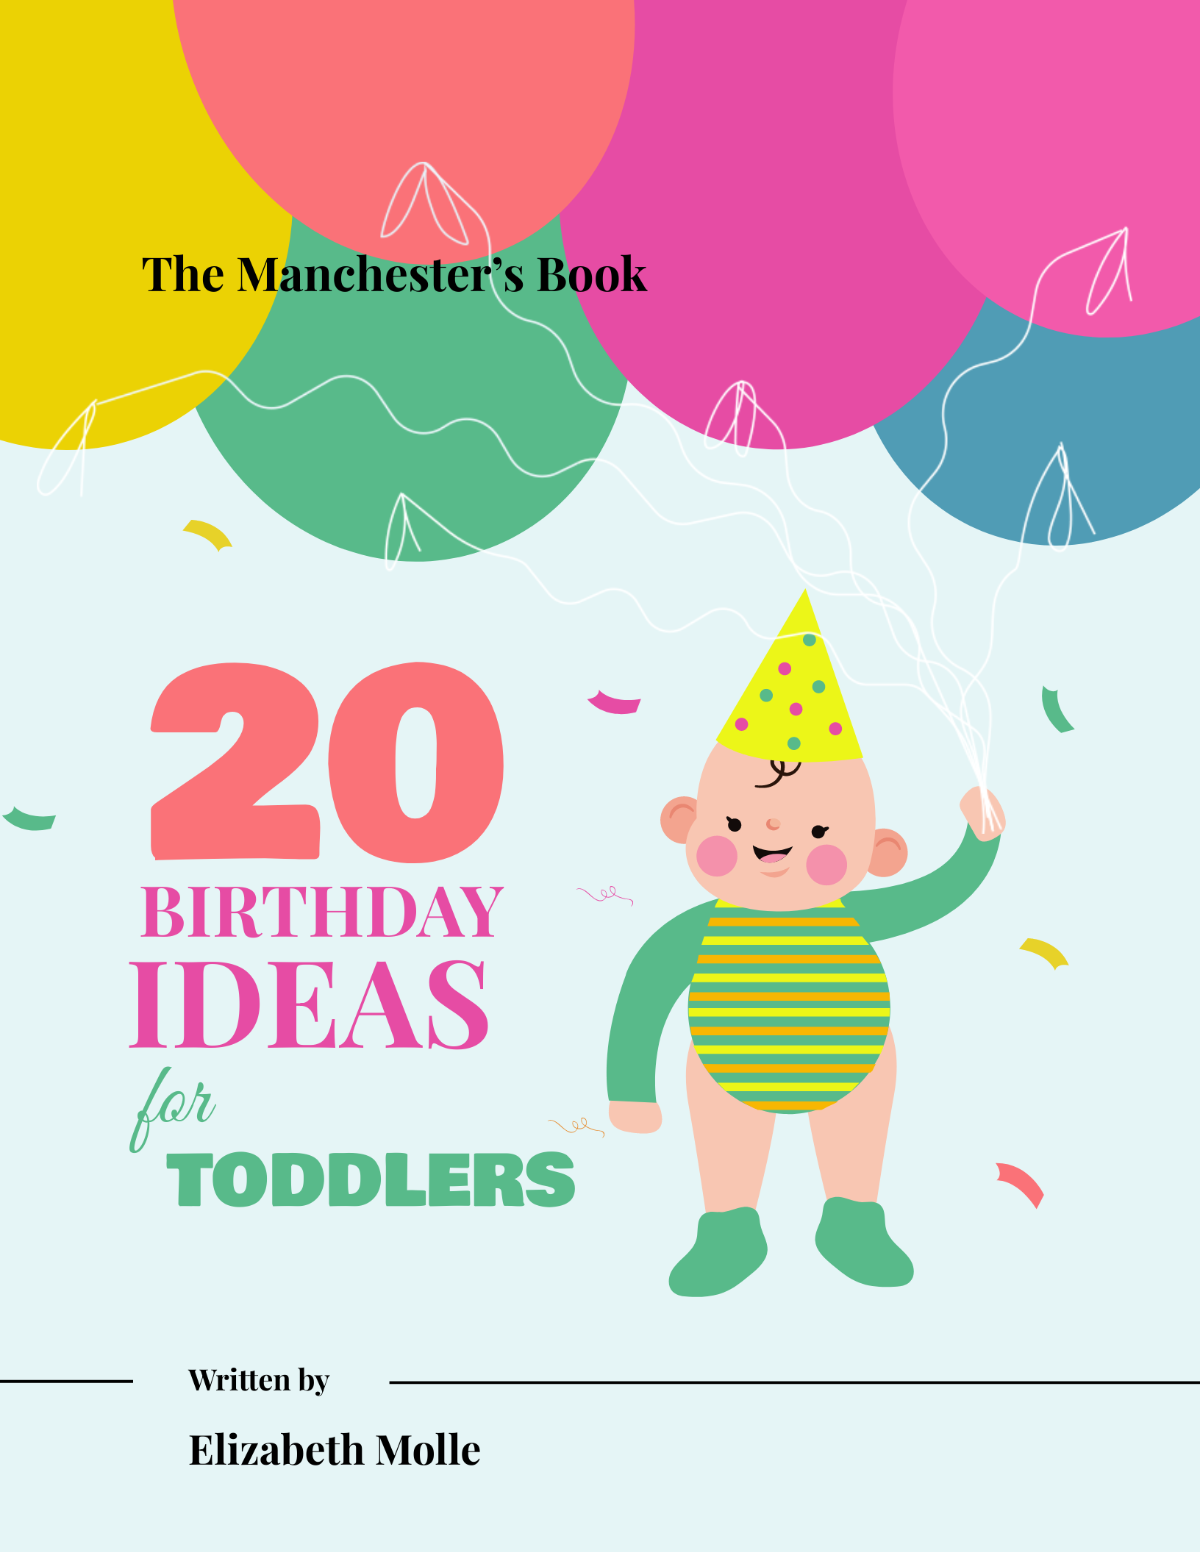 Children's Birthday Book Cover Template